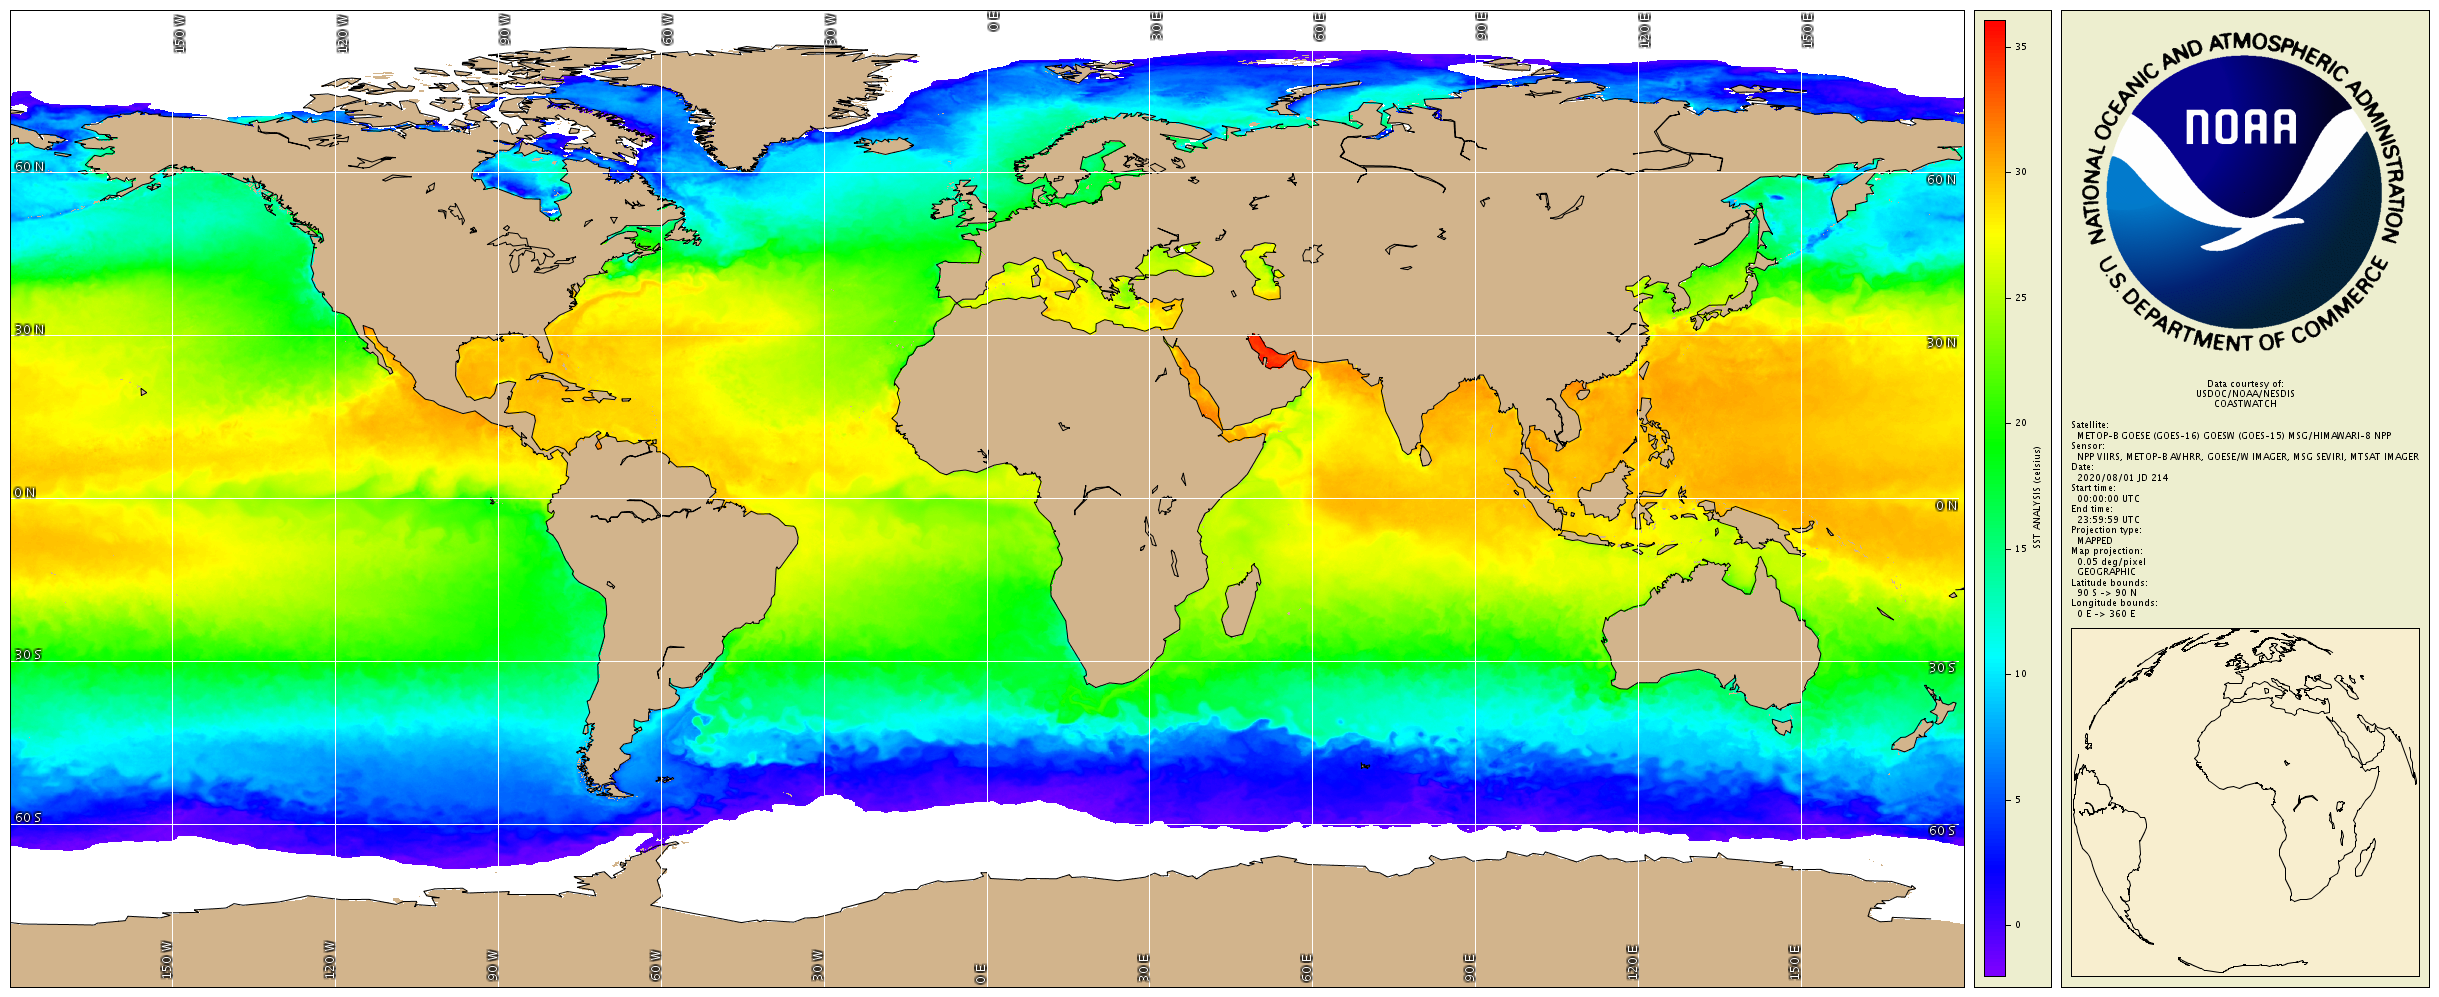 NOAA Blended Global SST